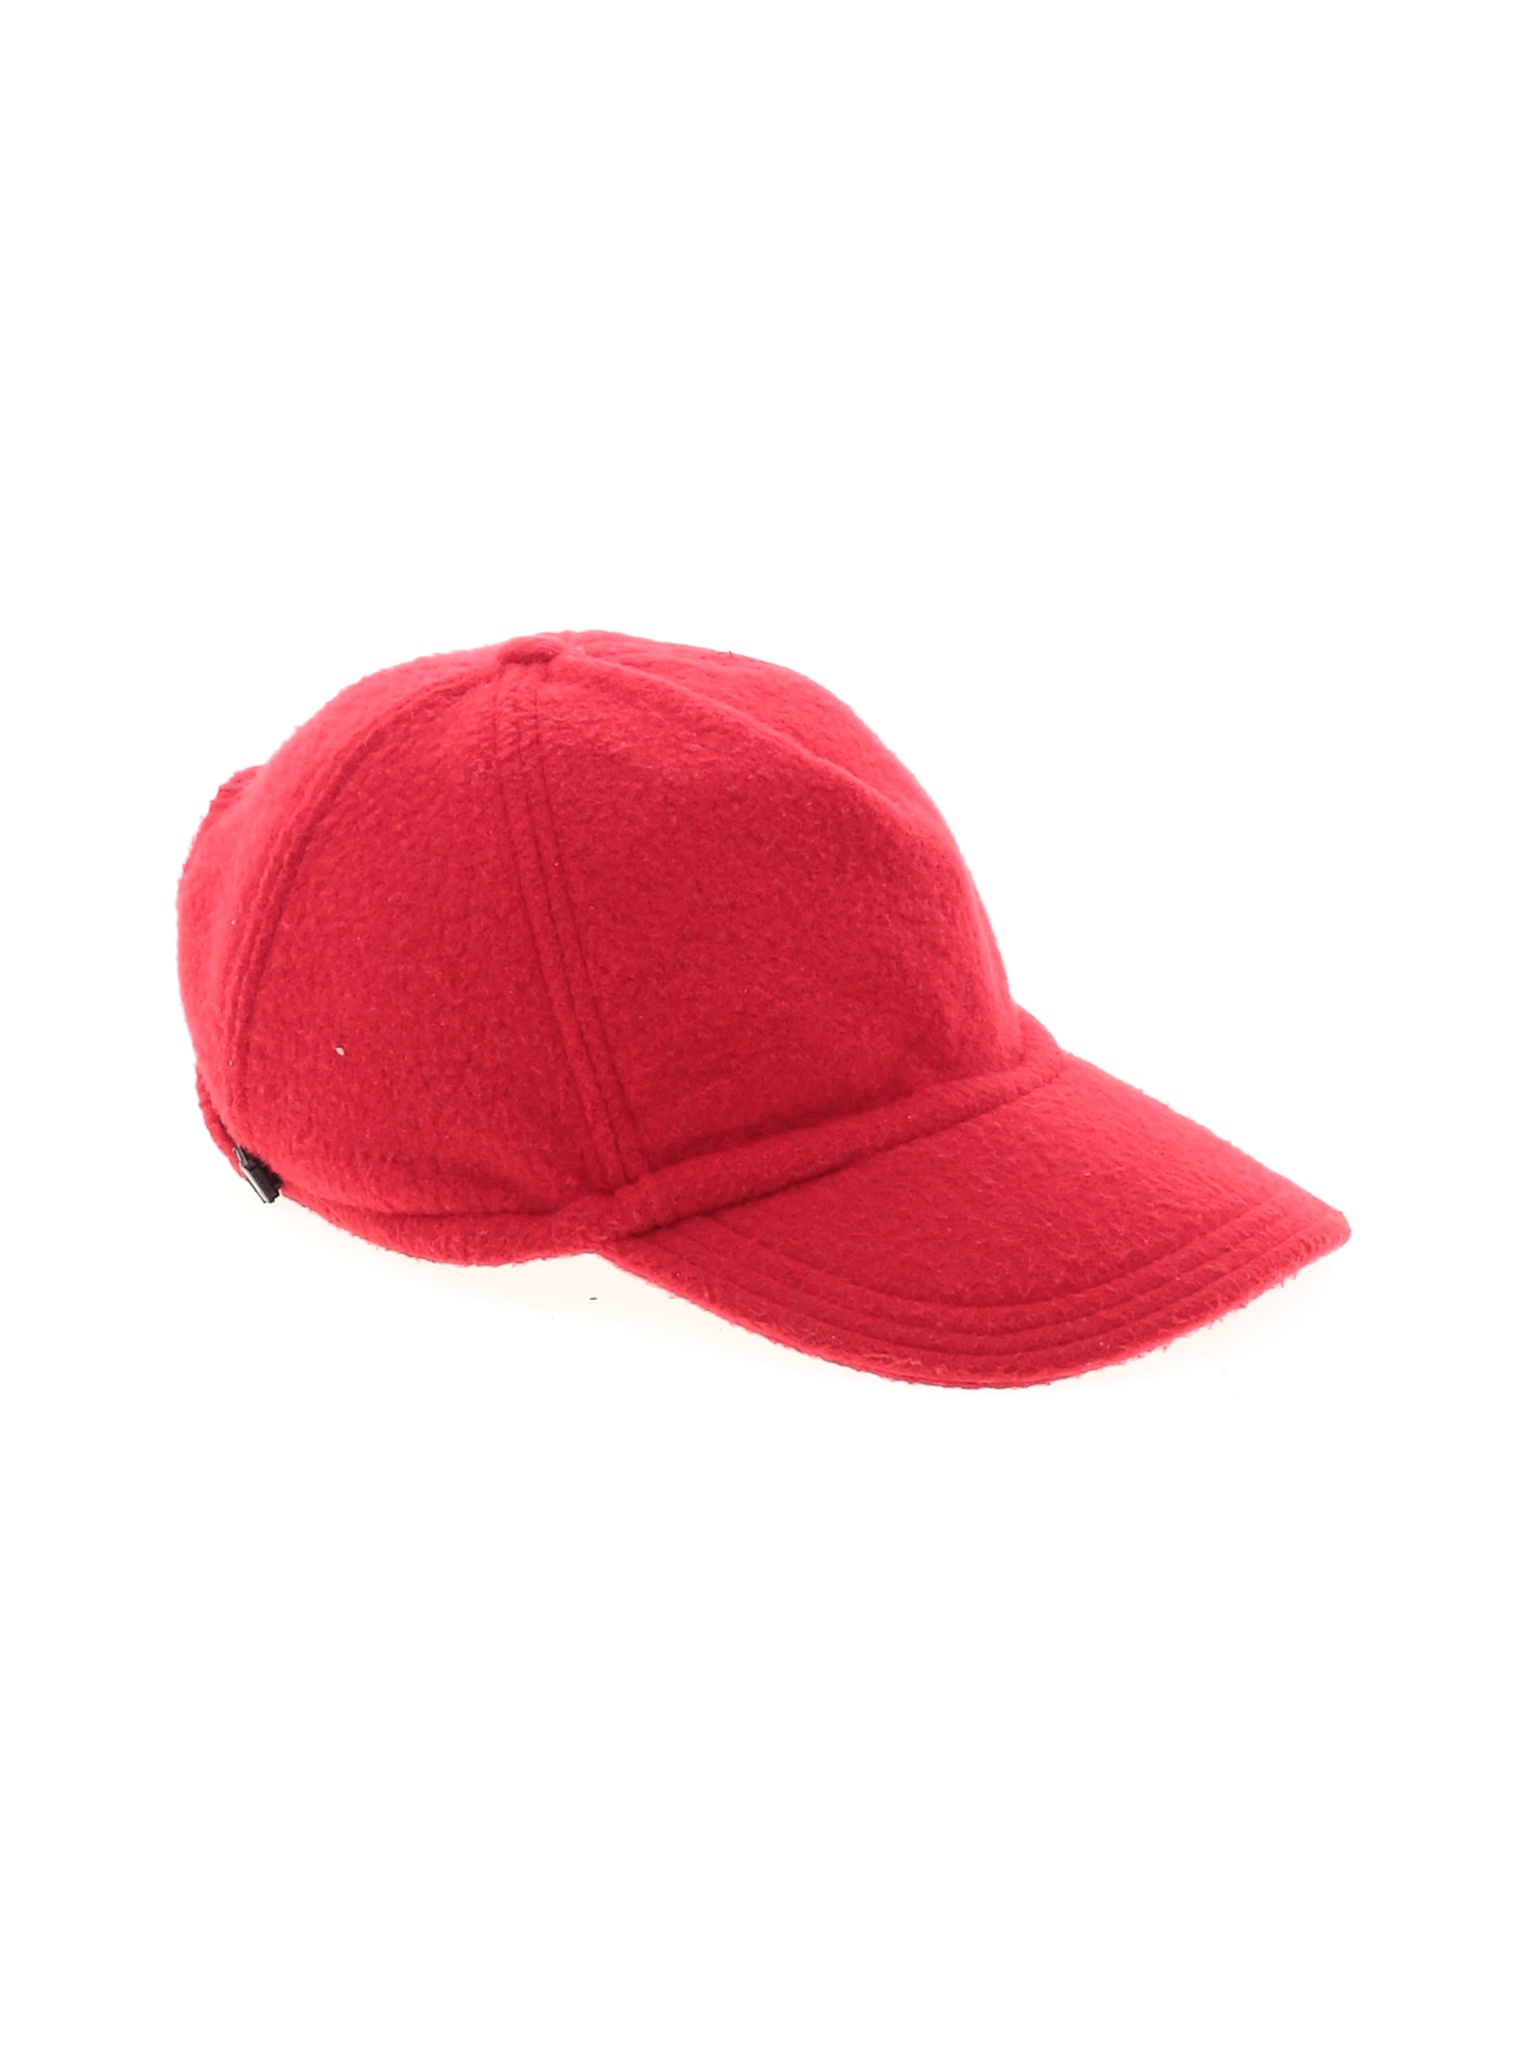 Gap Women Red Baseball Cap M | eBay